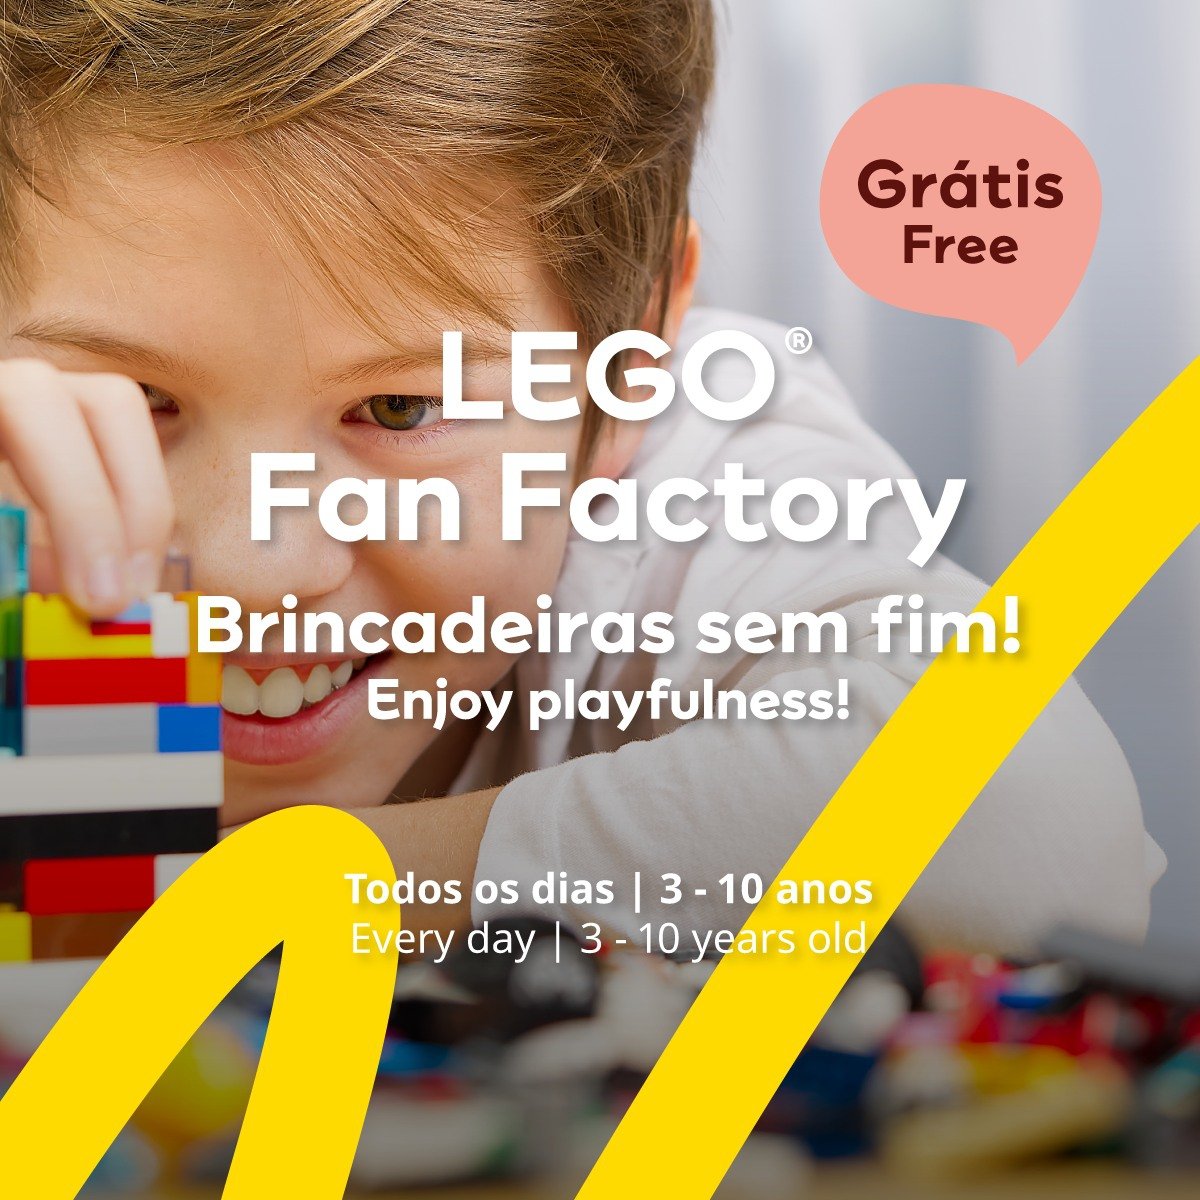 Lego Fan Factory at MAR Shopping